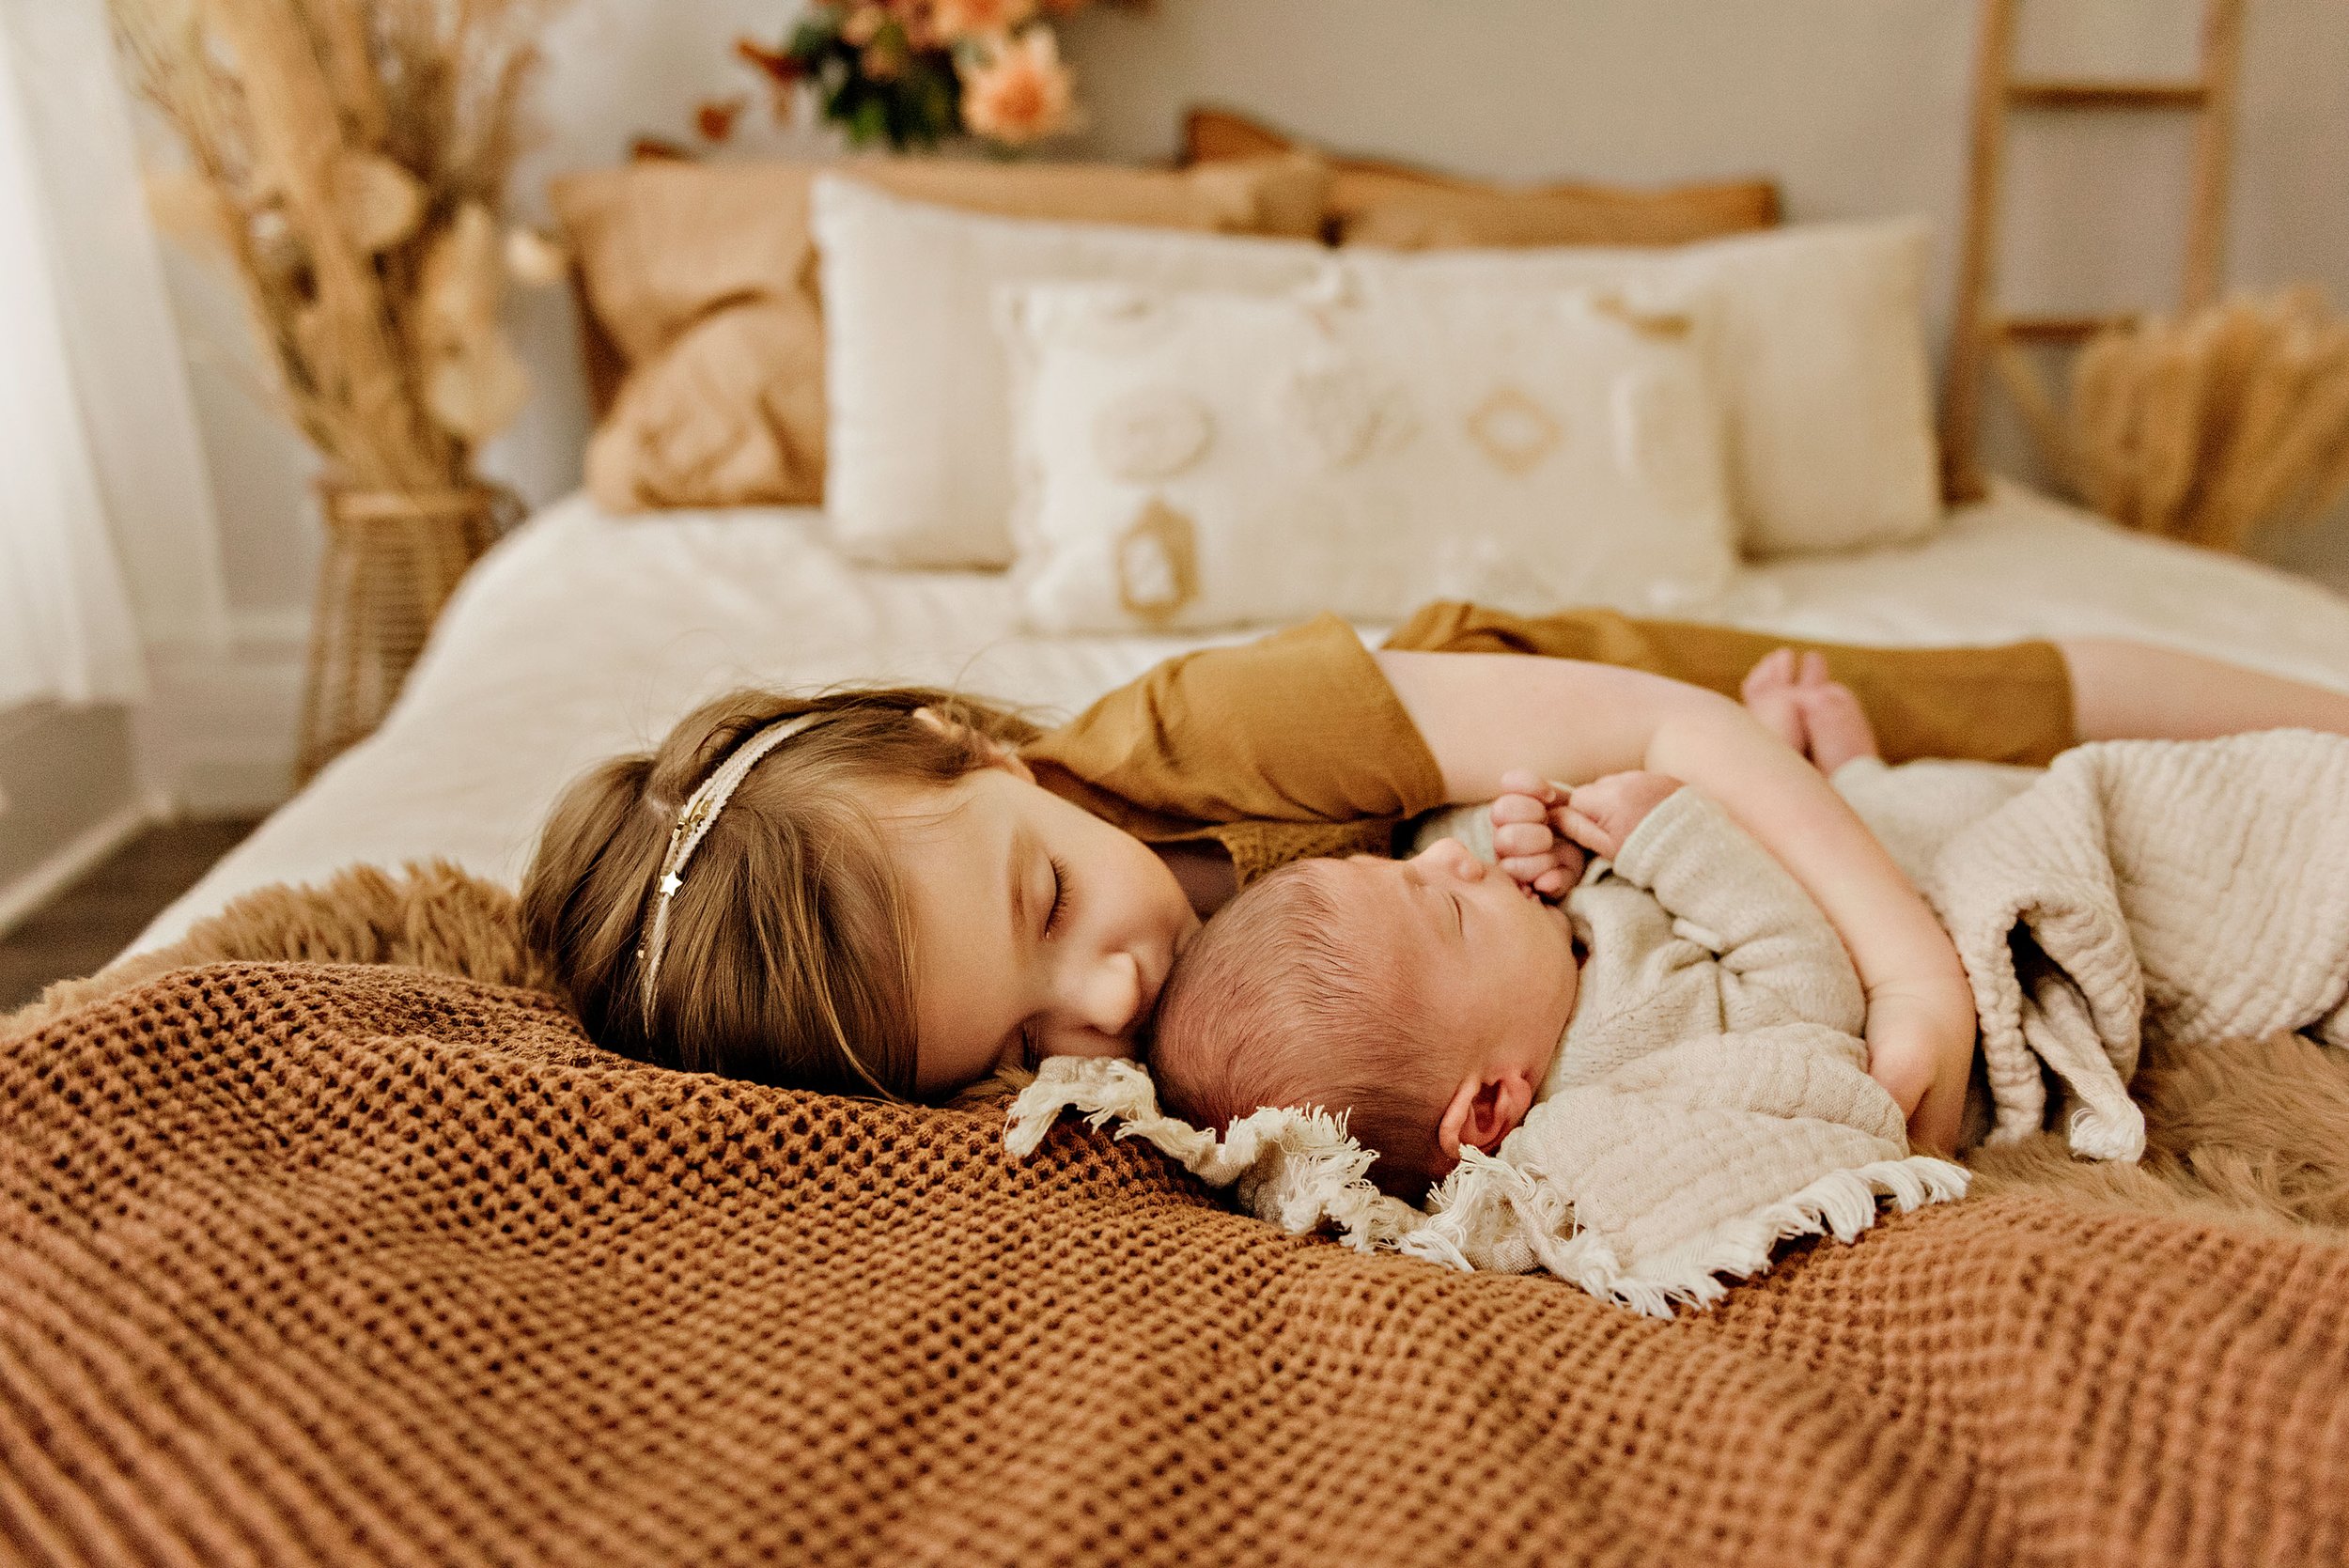 cleveland-ohio-newborn-photographer-lauren-grayson-studio-baby-family-photo-session16.jpg